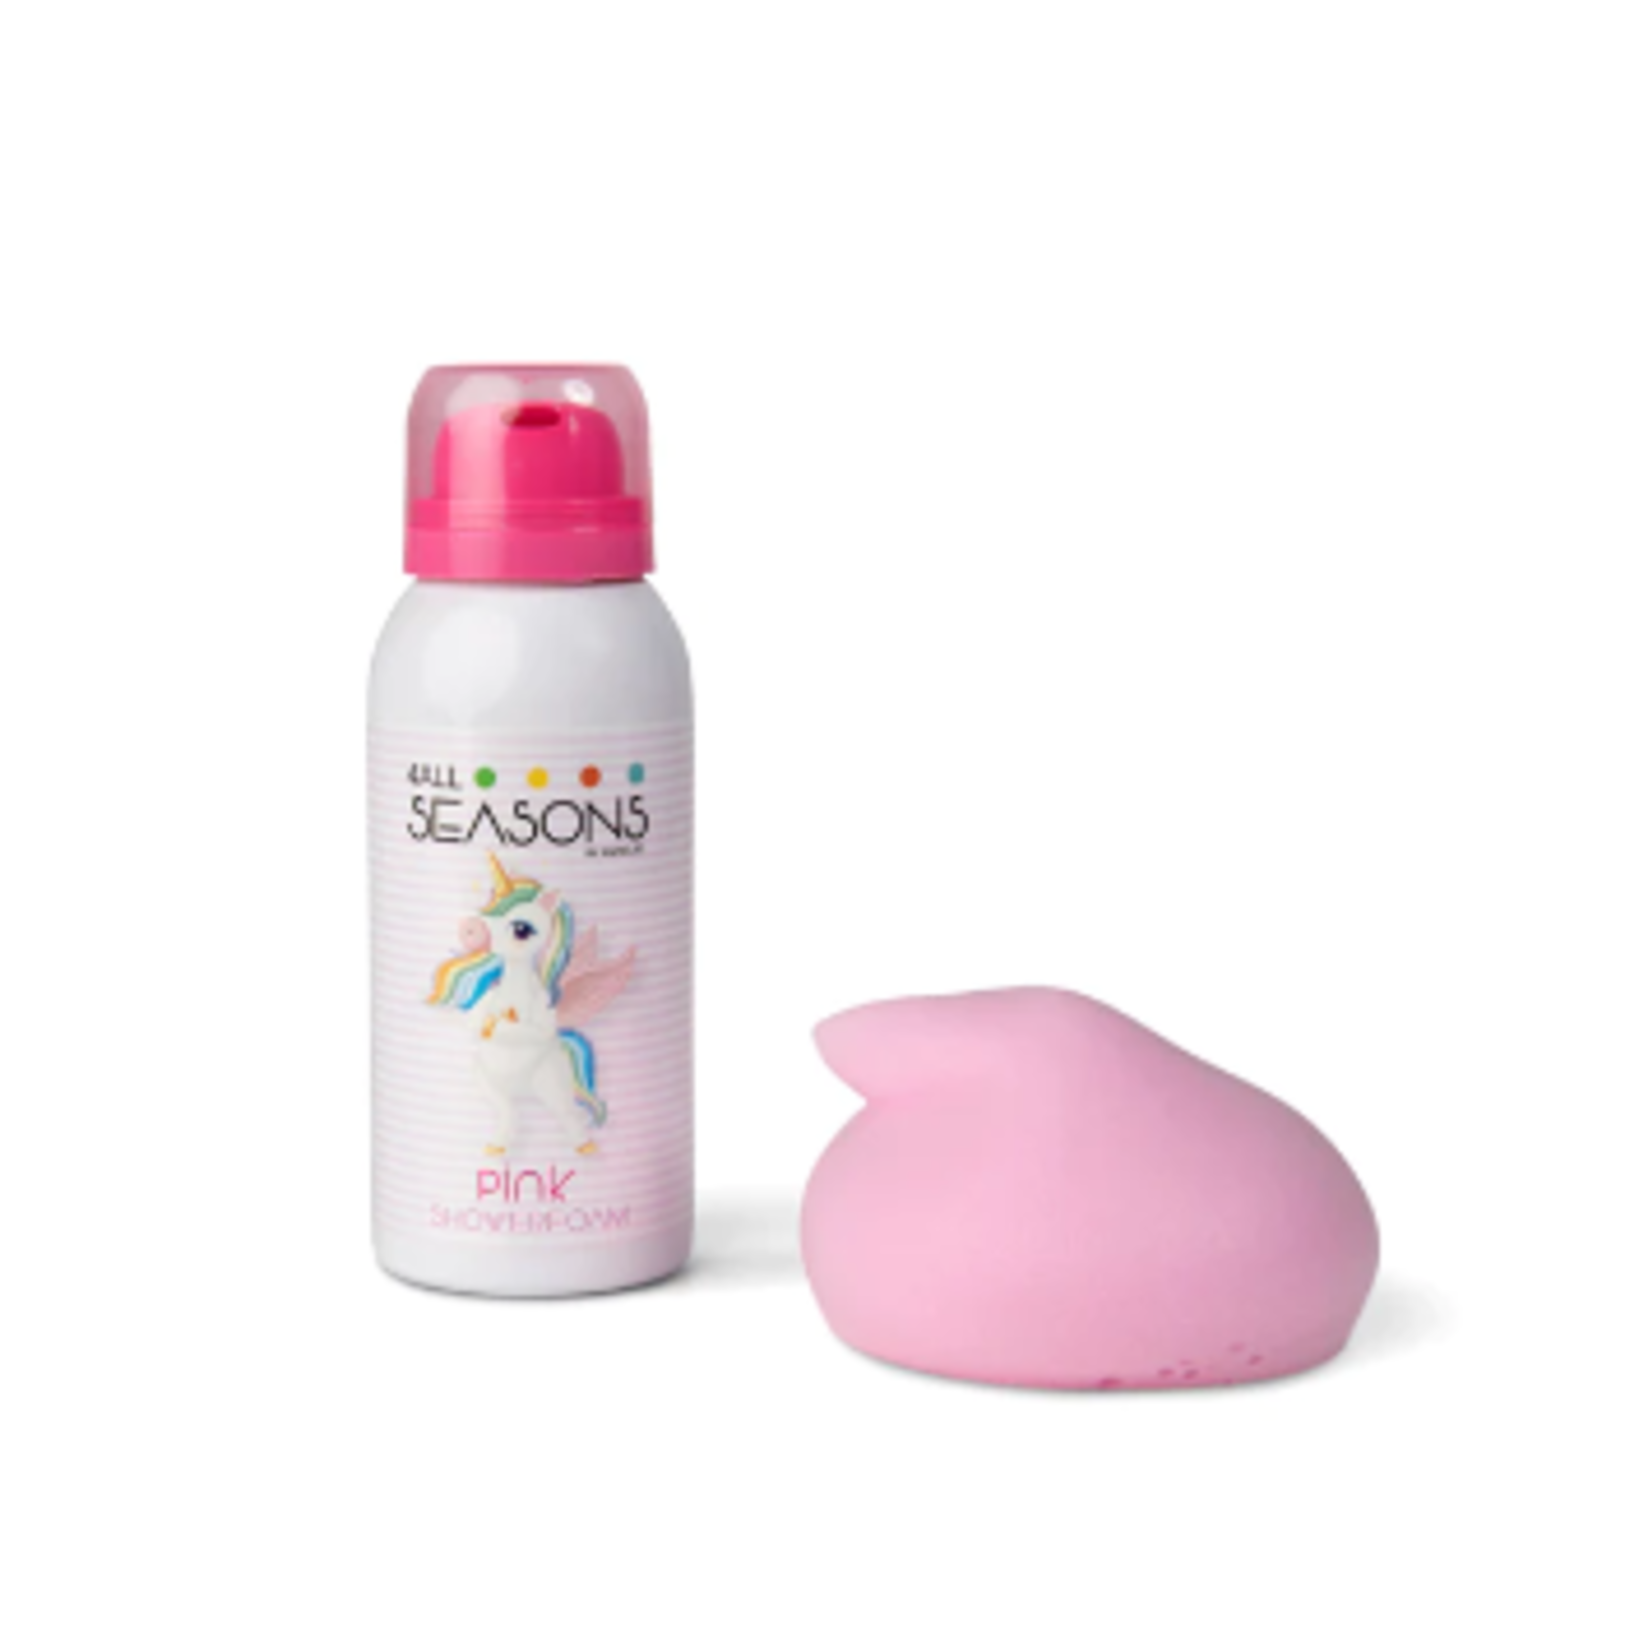 4All Seasons 4All Seasons - Shower Foam Pink Unicorn 100ml